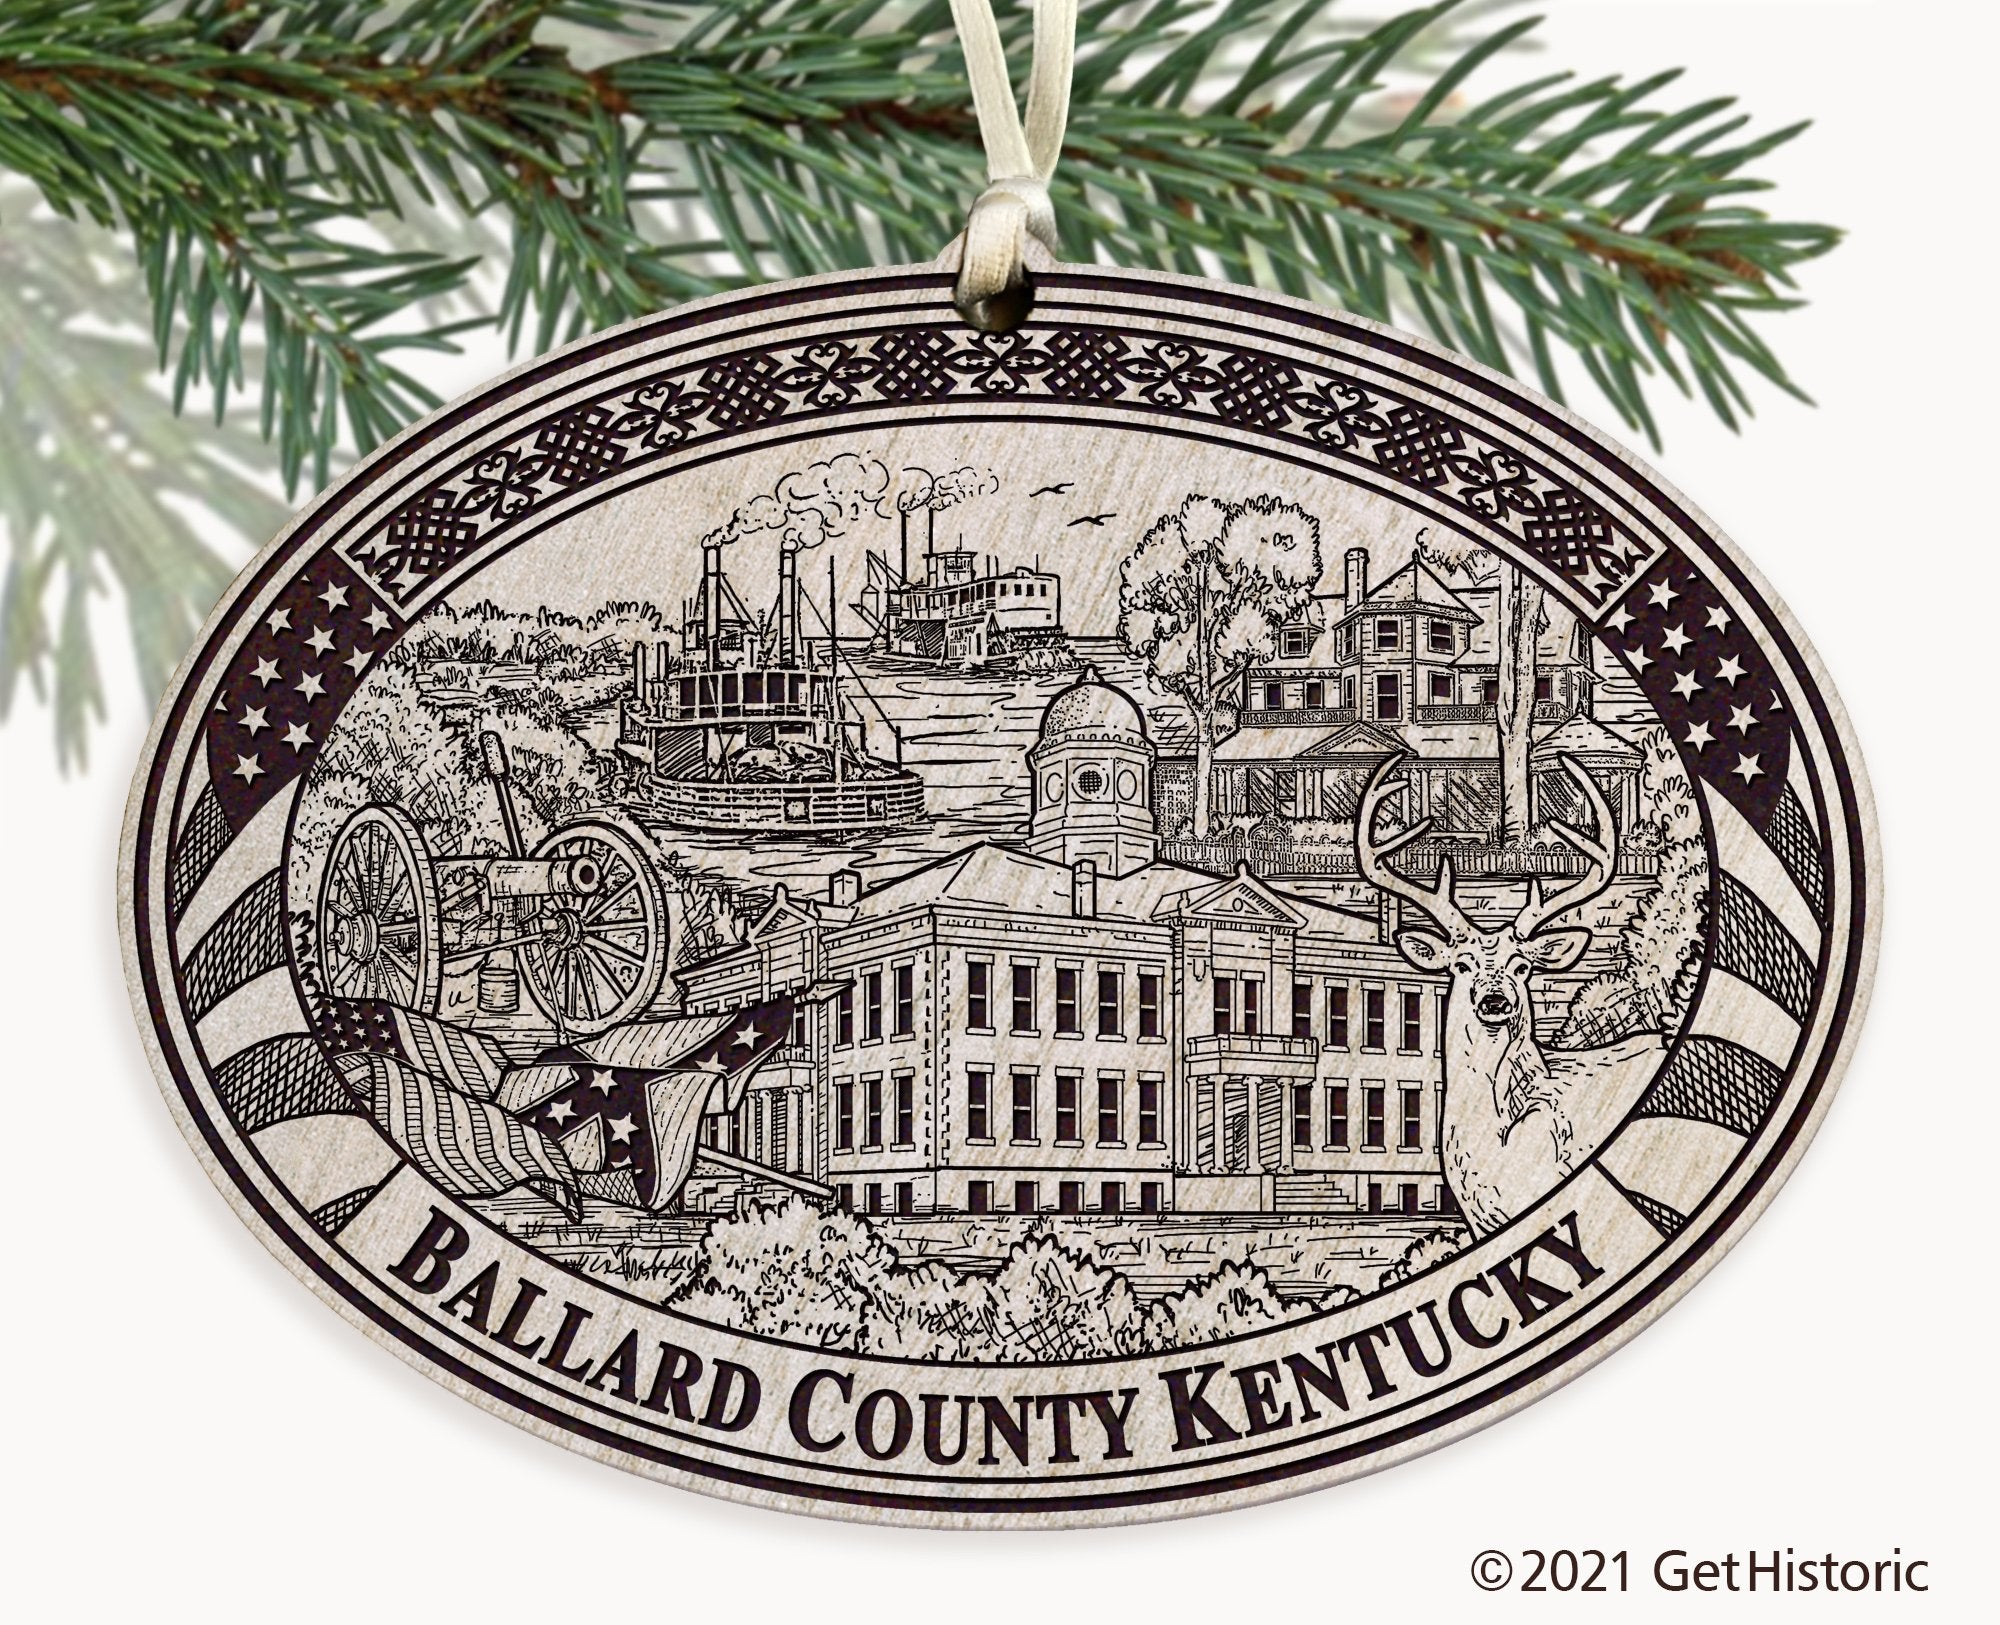 Ballard County Kentucky Engraved Ornament